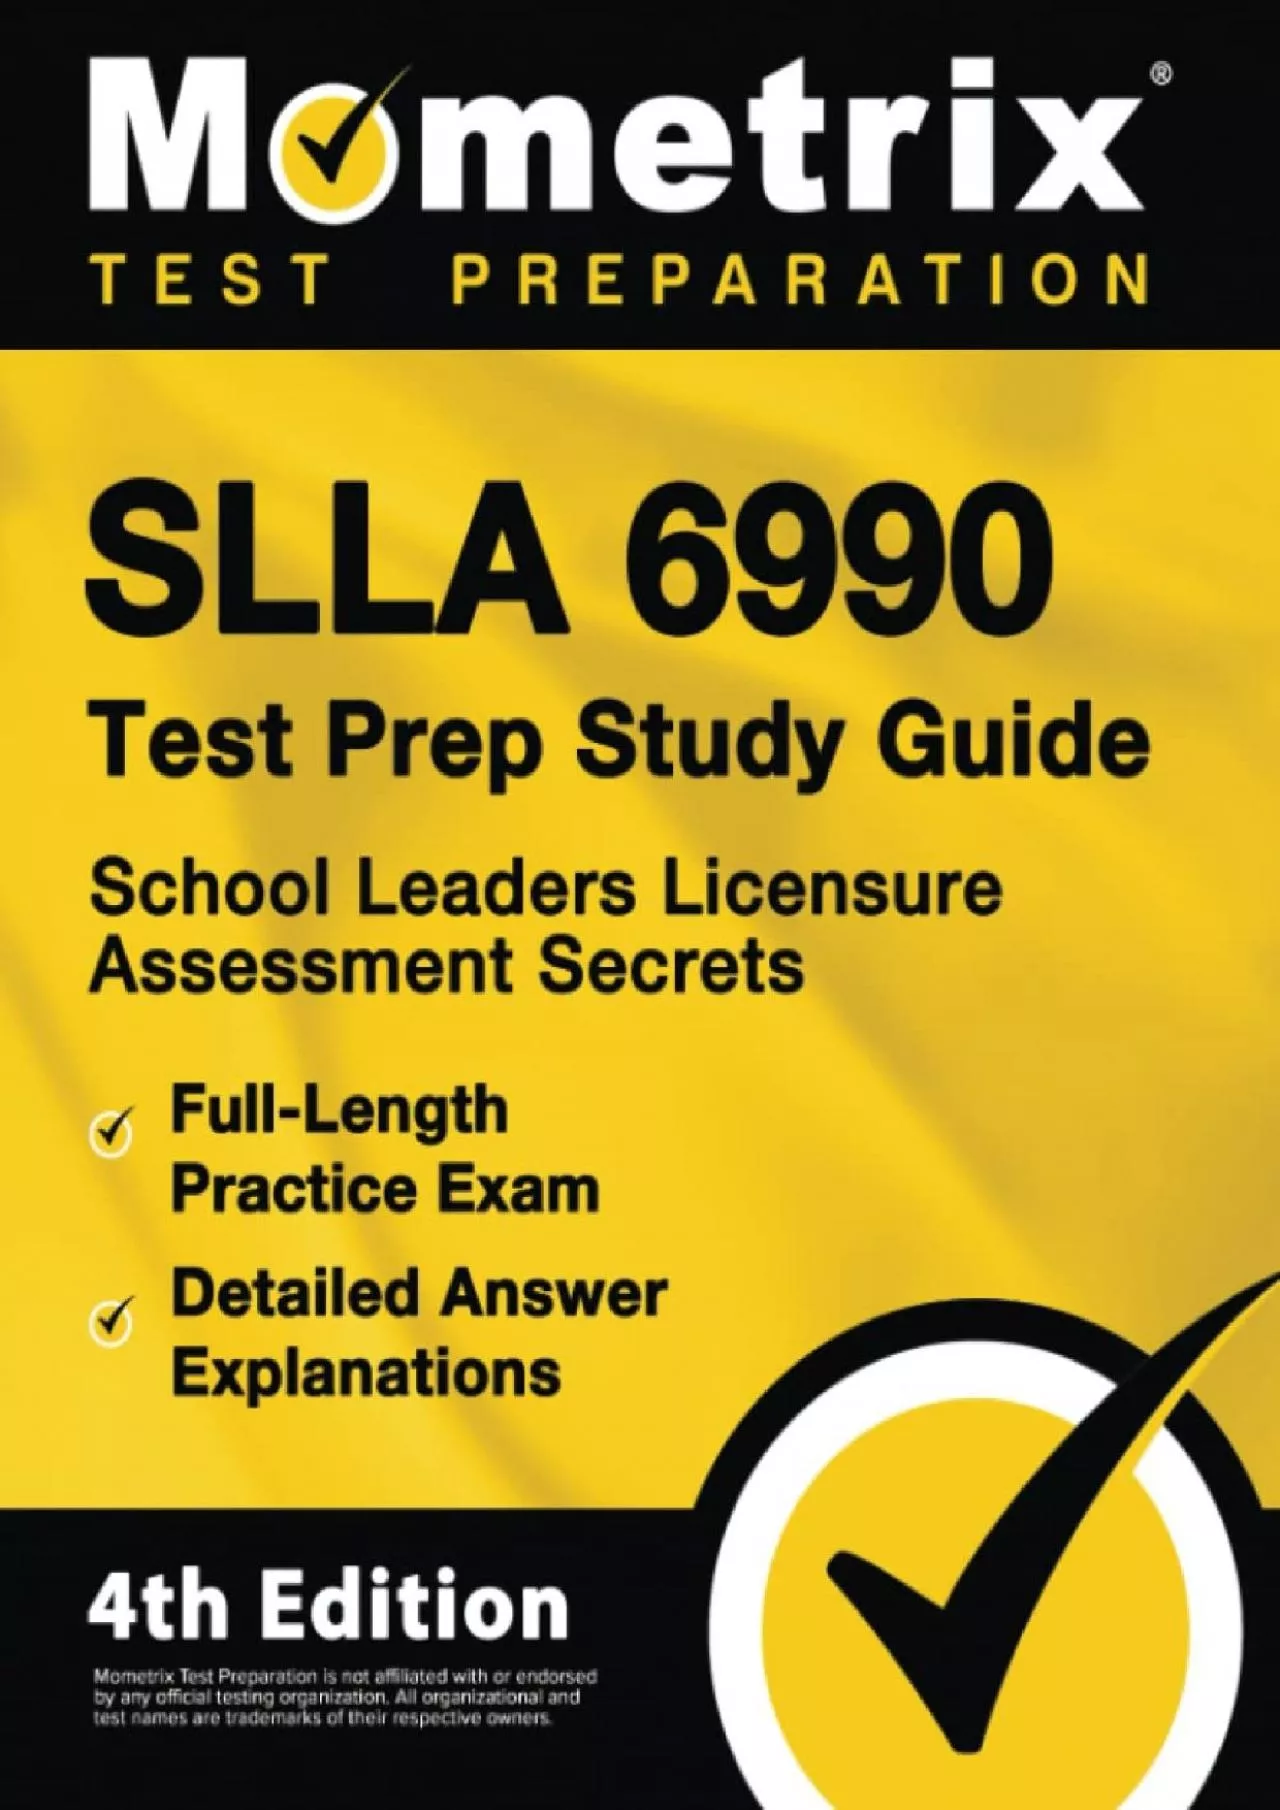 [EBOOK] SLLA 6990 Test Prep Study Guide: School Leaders Licensure Assessment Secrets,